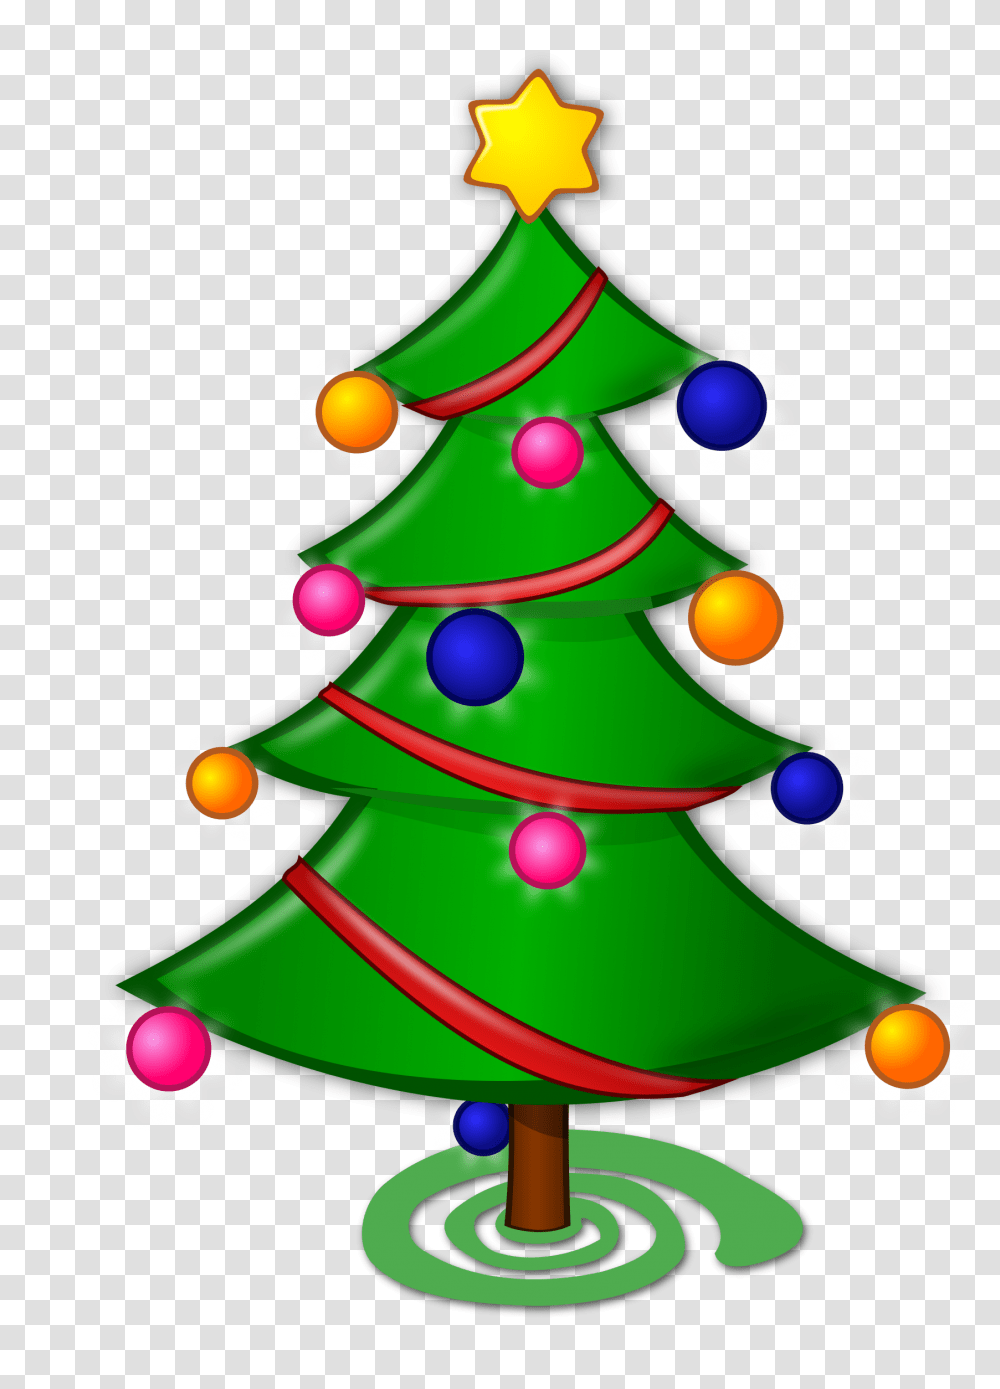 Colored Christmas Tree Icons, Plant, Ornament, Star Symbol, Bush Transparent Png